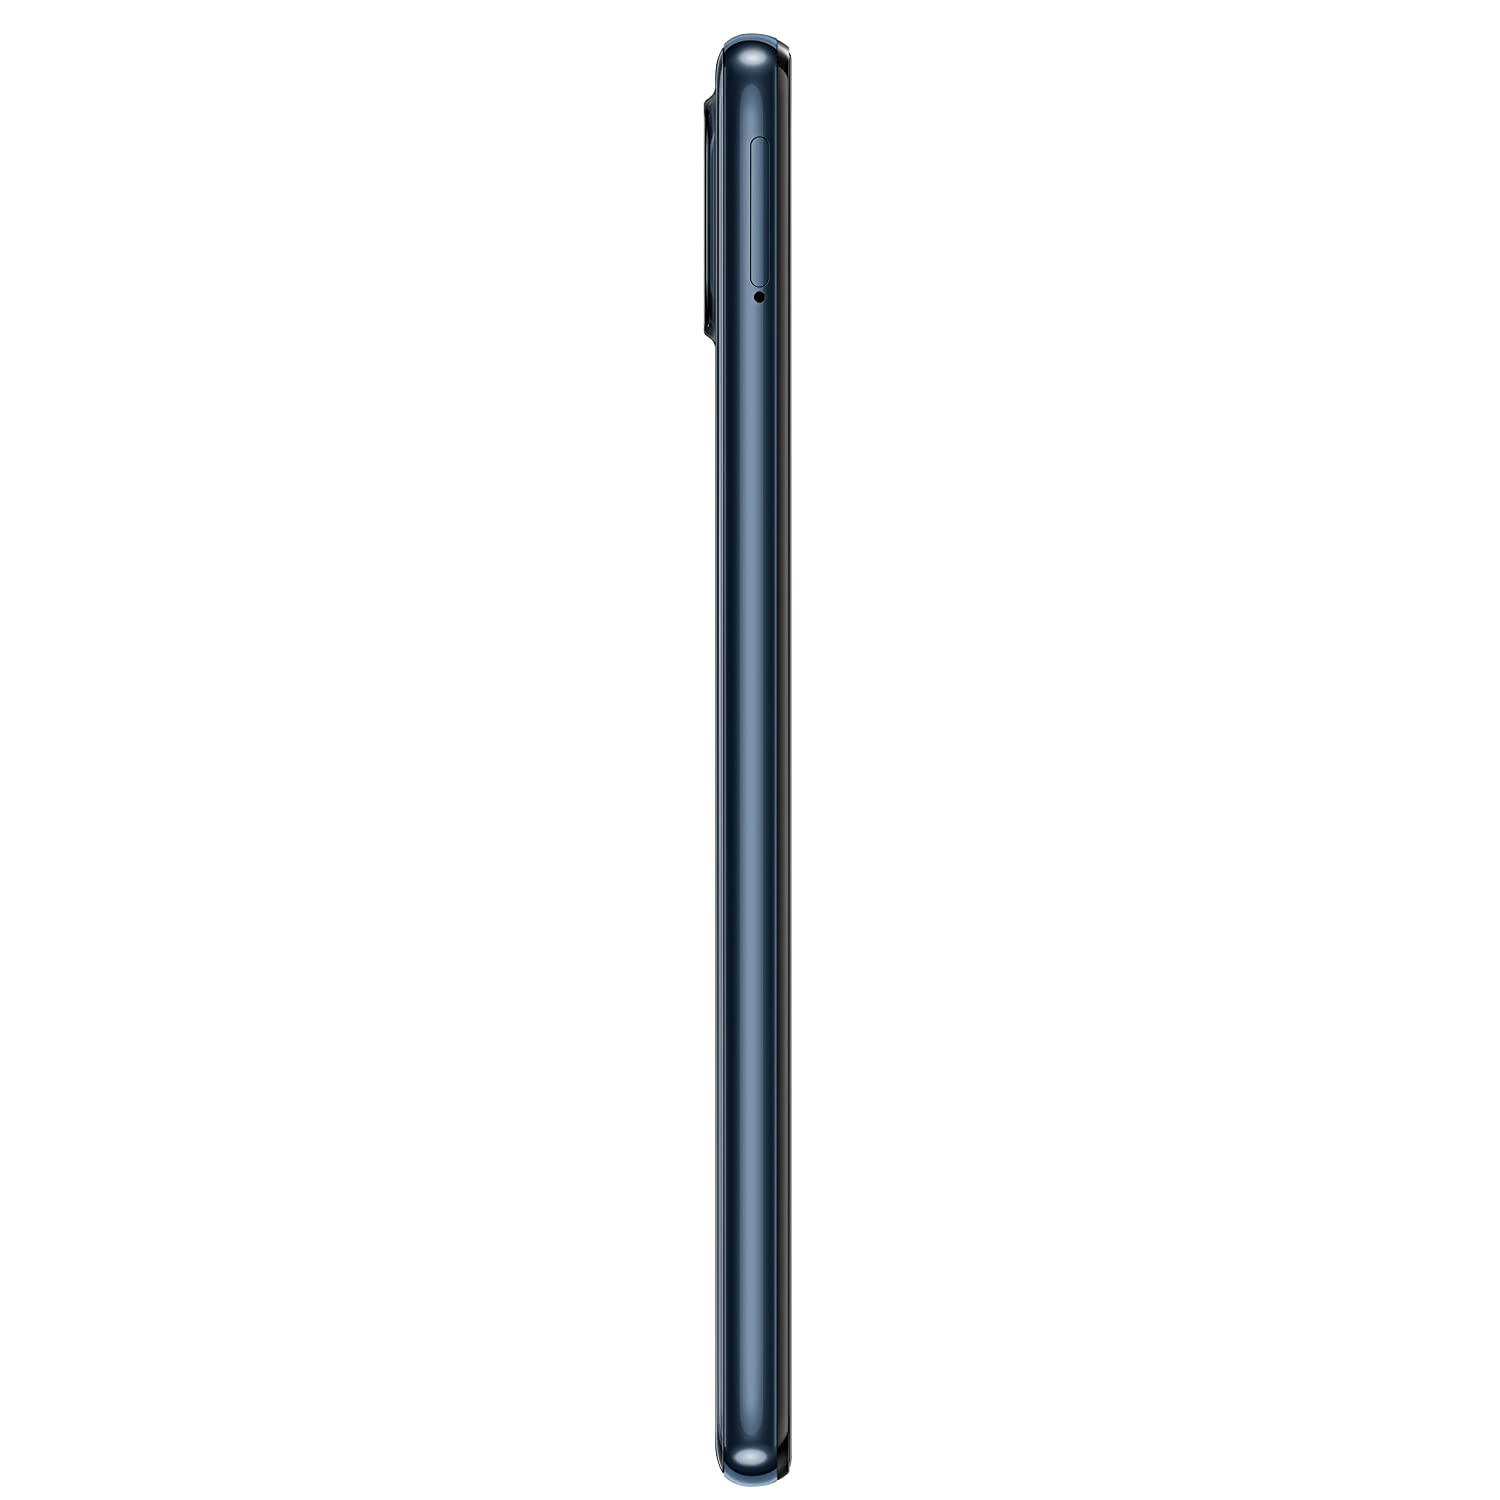 SAMSUNG Galaxy M32 (Black, 64 GB)  (4 GB RAM)